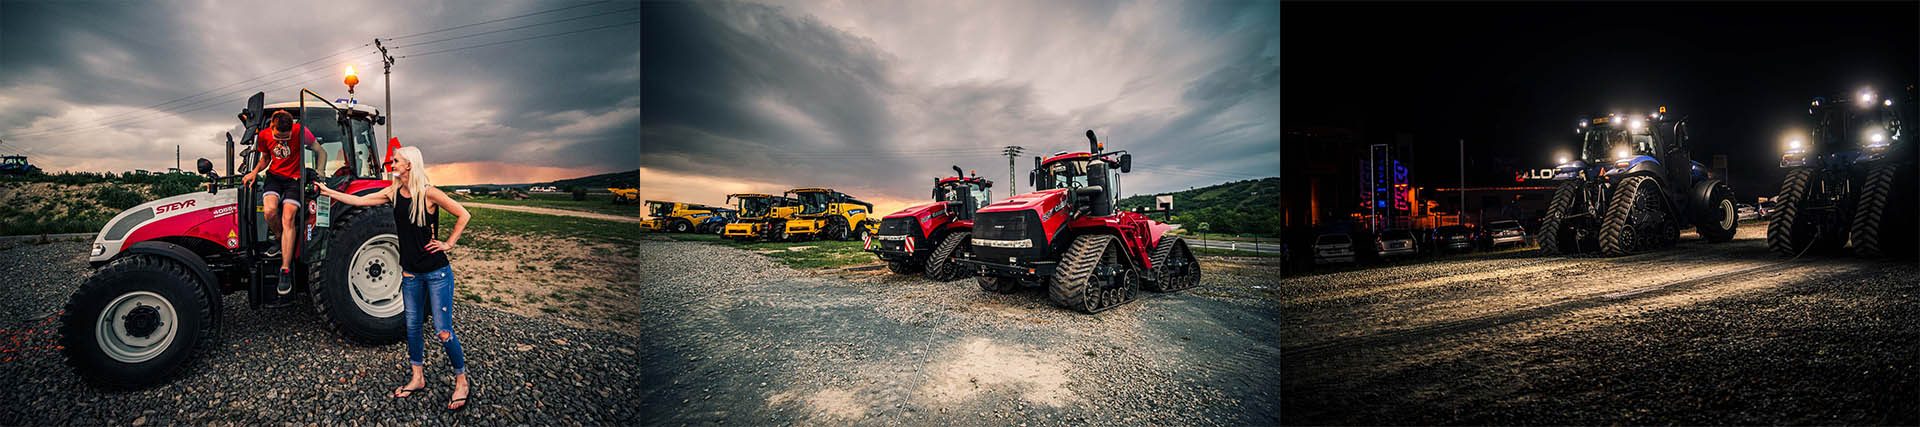 traktorove-souteze.jpg